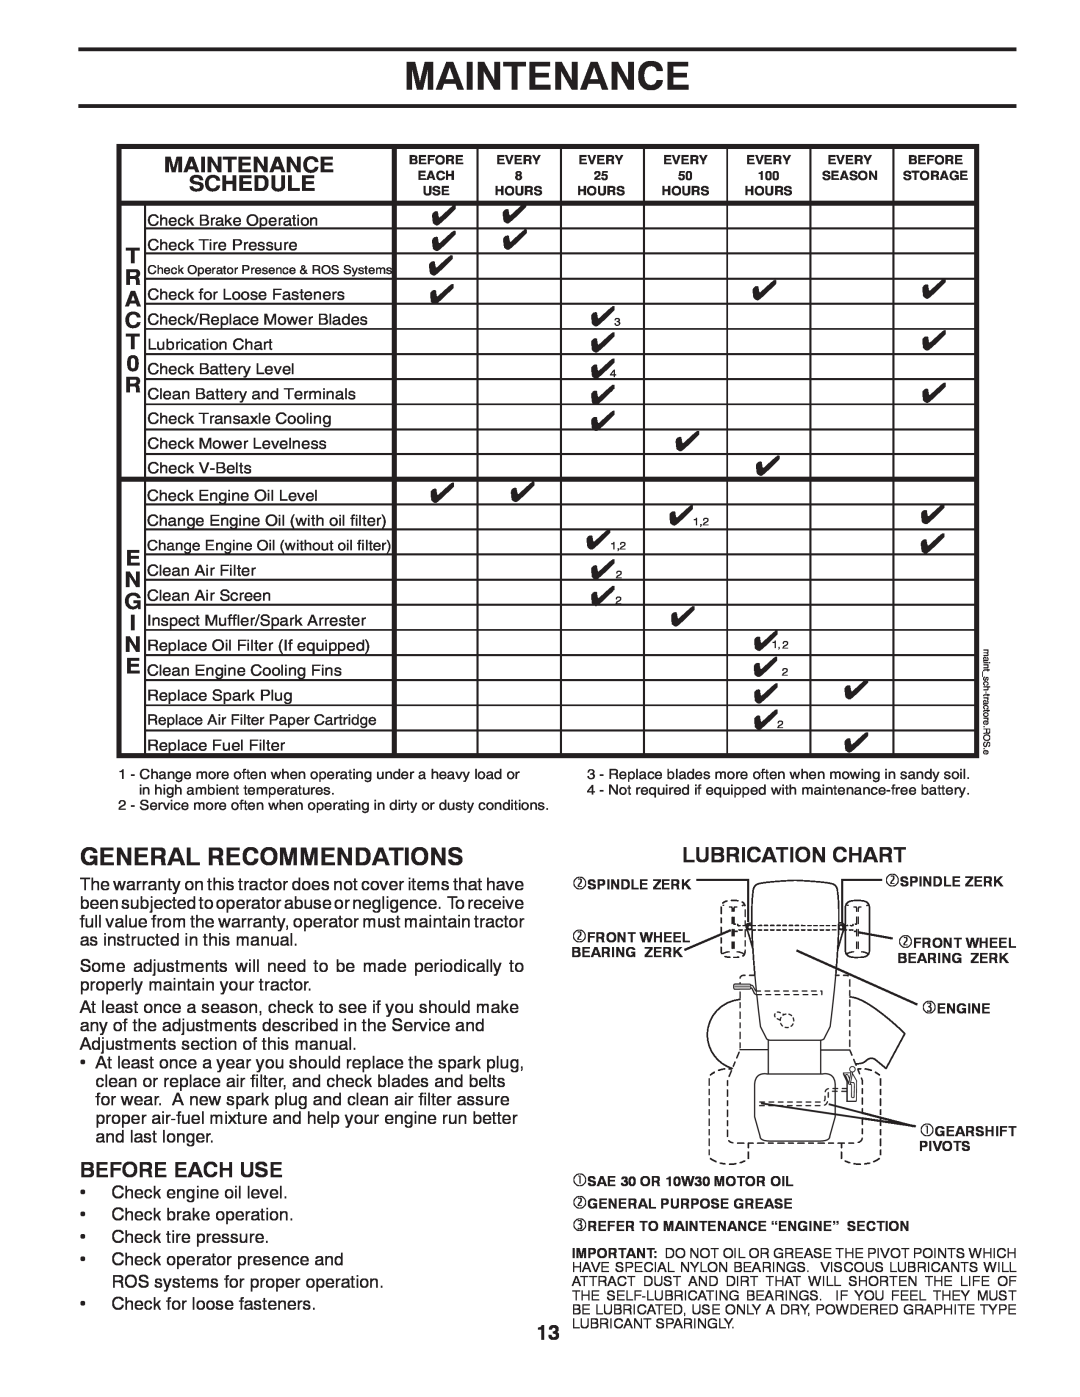 McCulloch 532 40 80-72 manual Maintenance, Lubrication Chart 